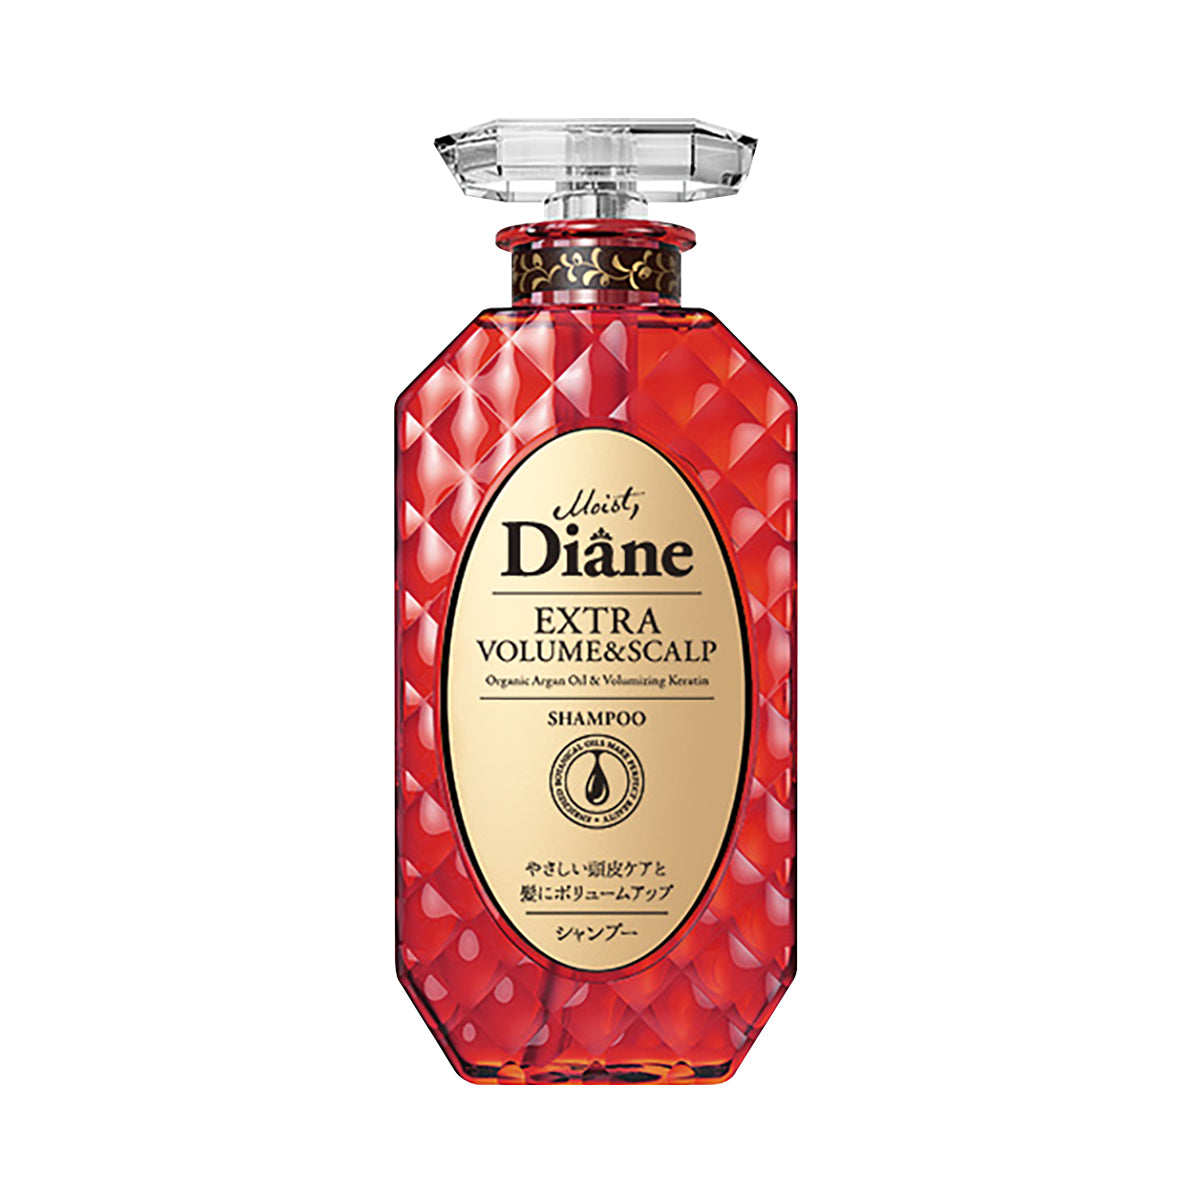 Moist Diane Perfect Beauty Extra Volume & Scalp Shampoo Beauty Moist Diane   